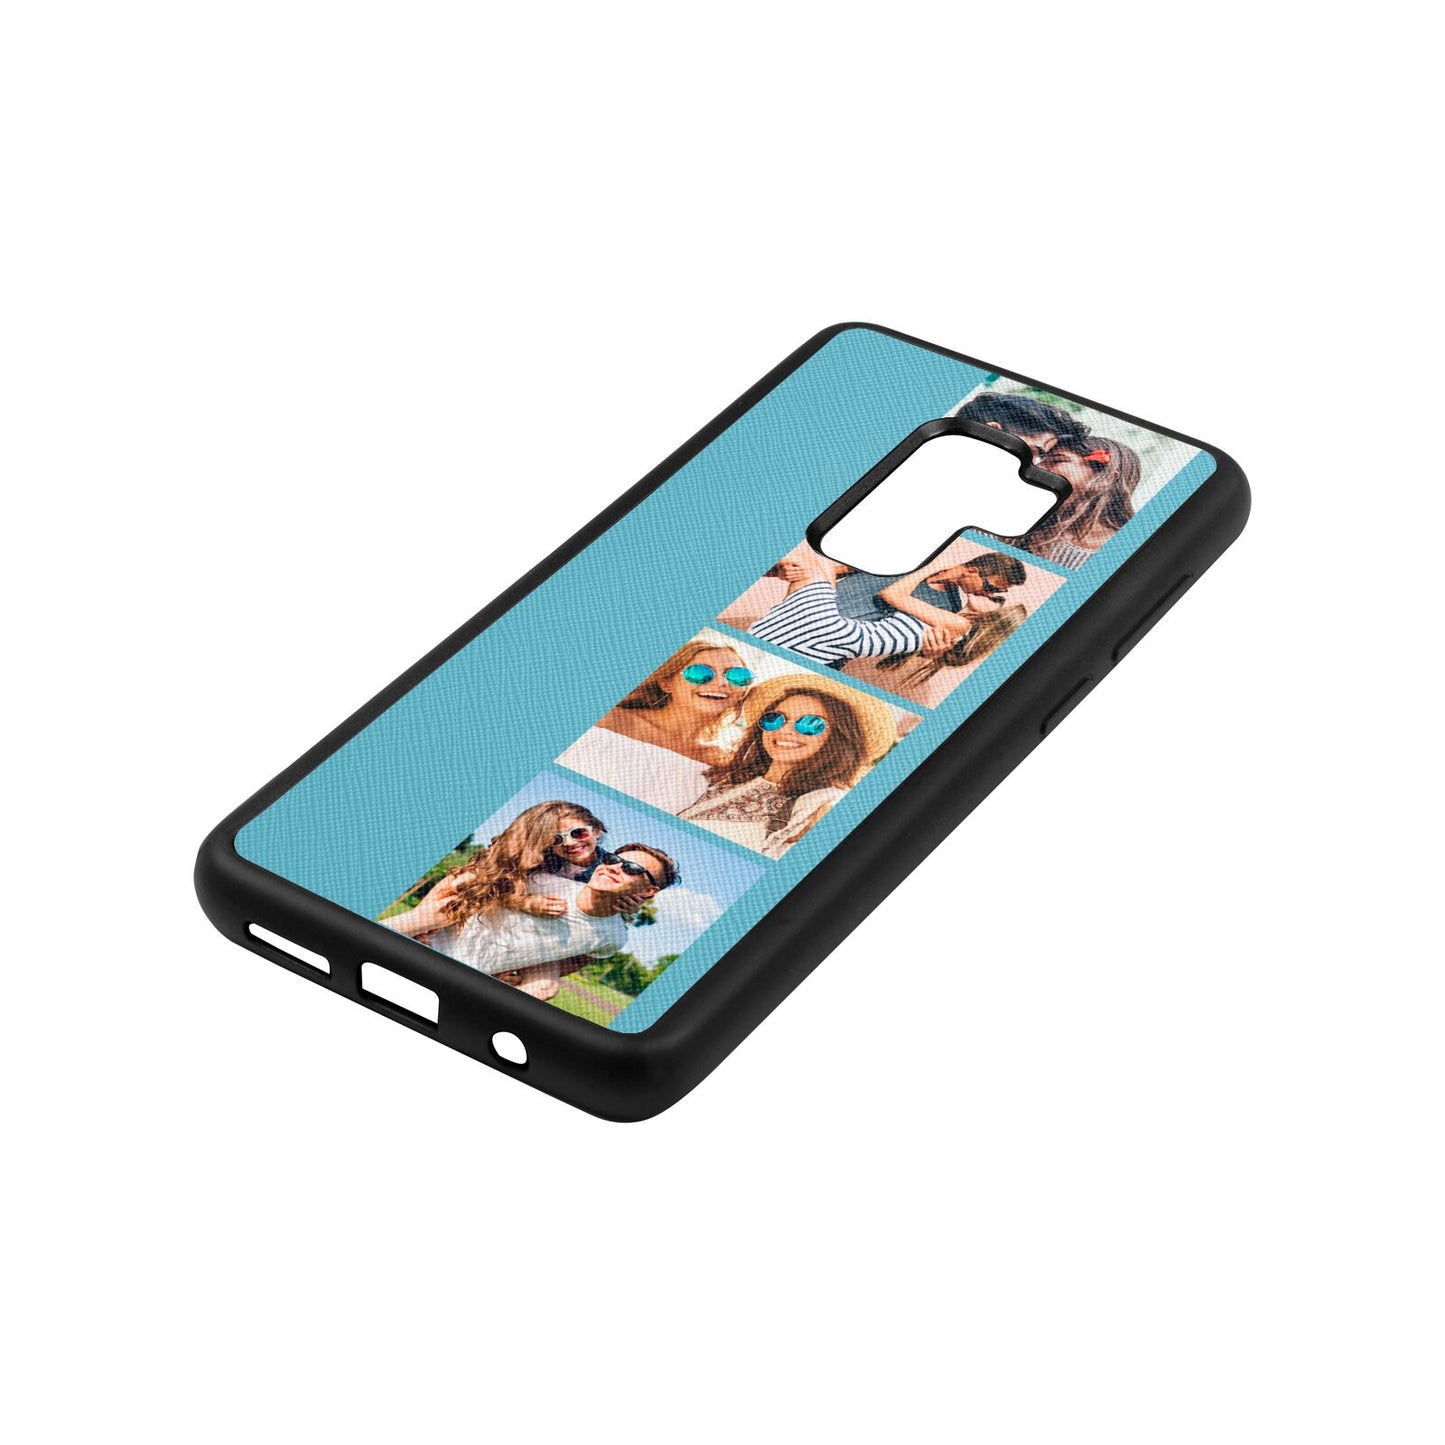 Photo Strip Montage Upload Sky Saffiano Leather Samsung S9 Plus Case Side Angle